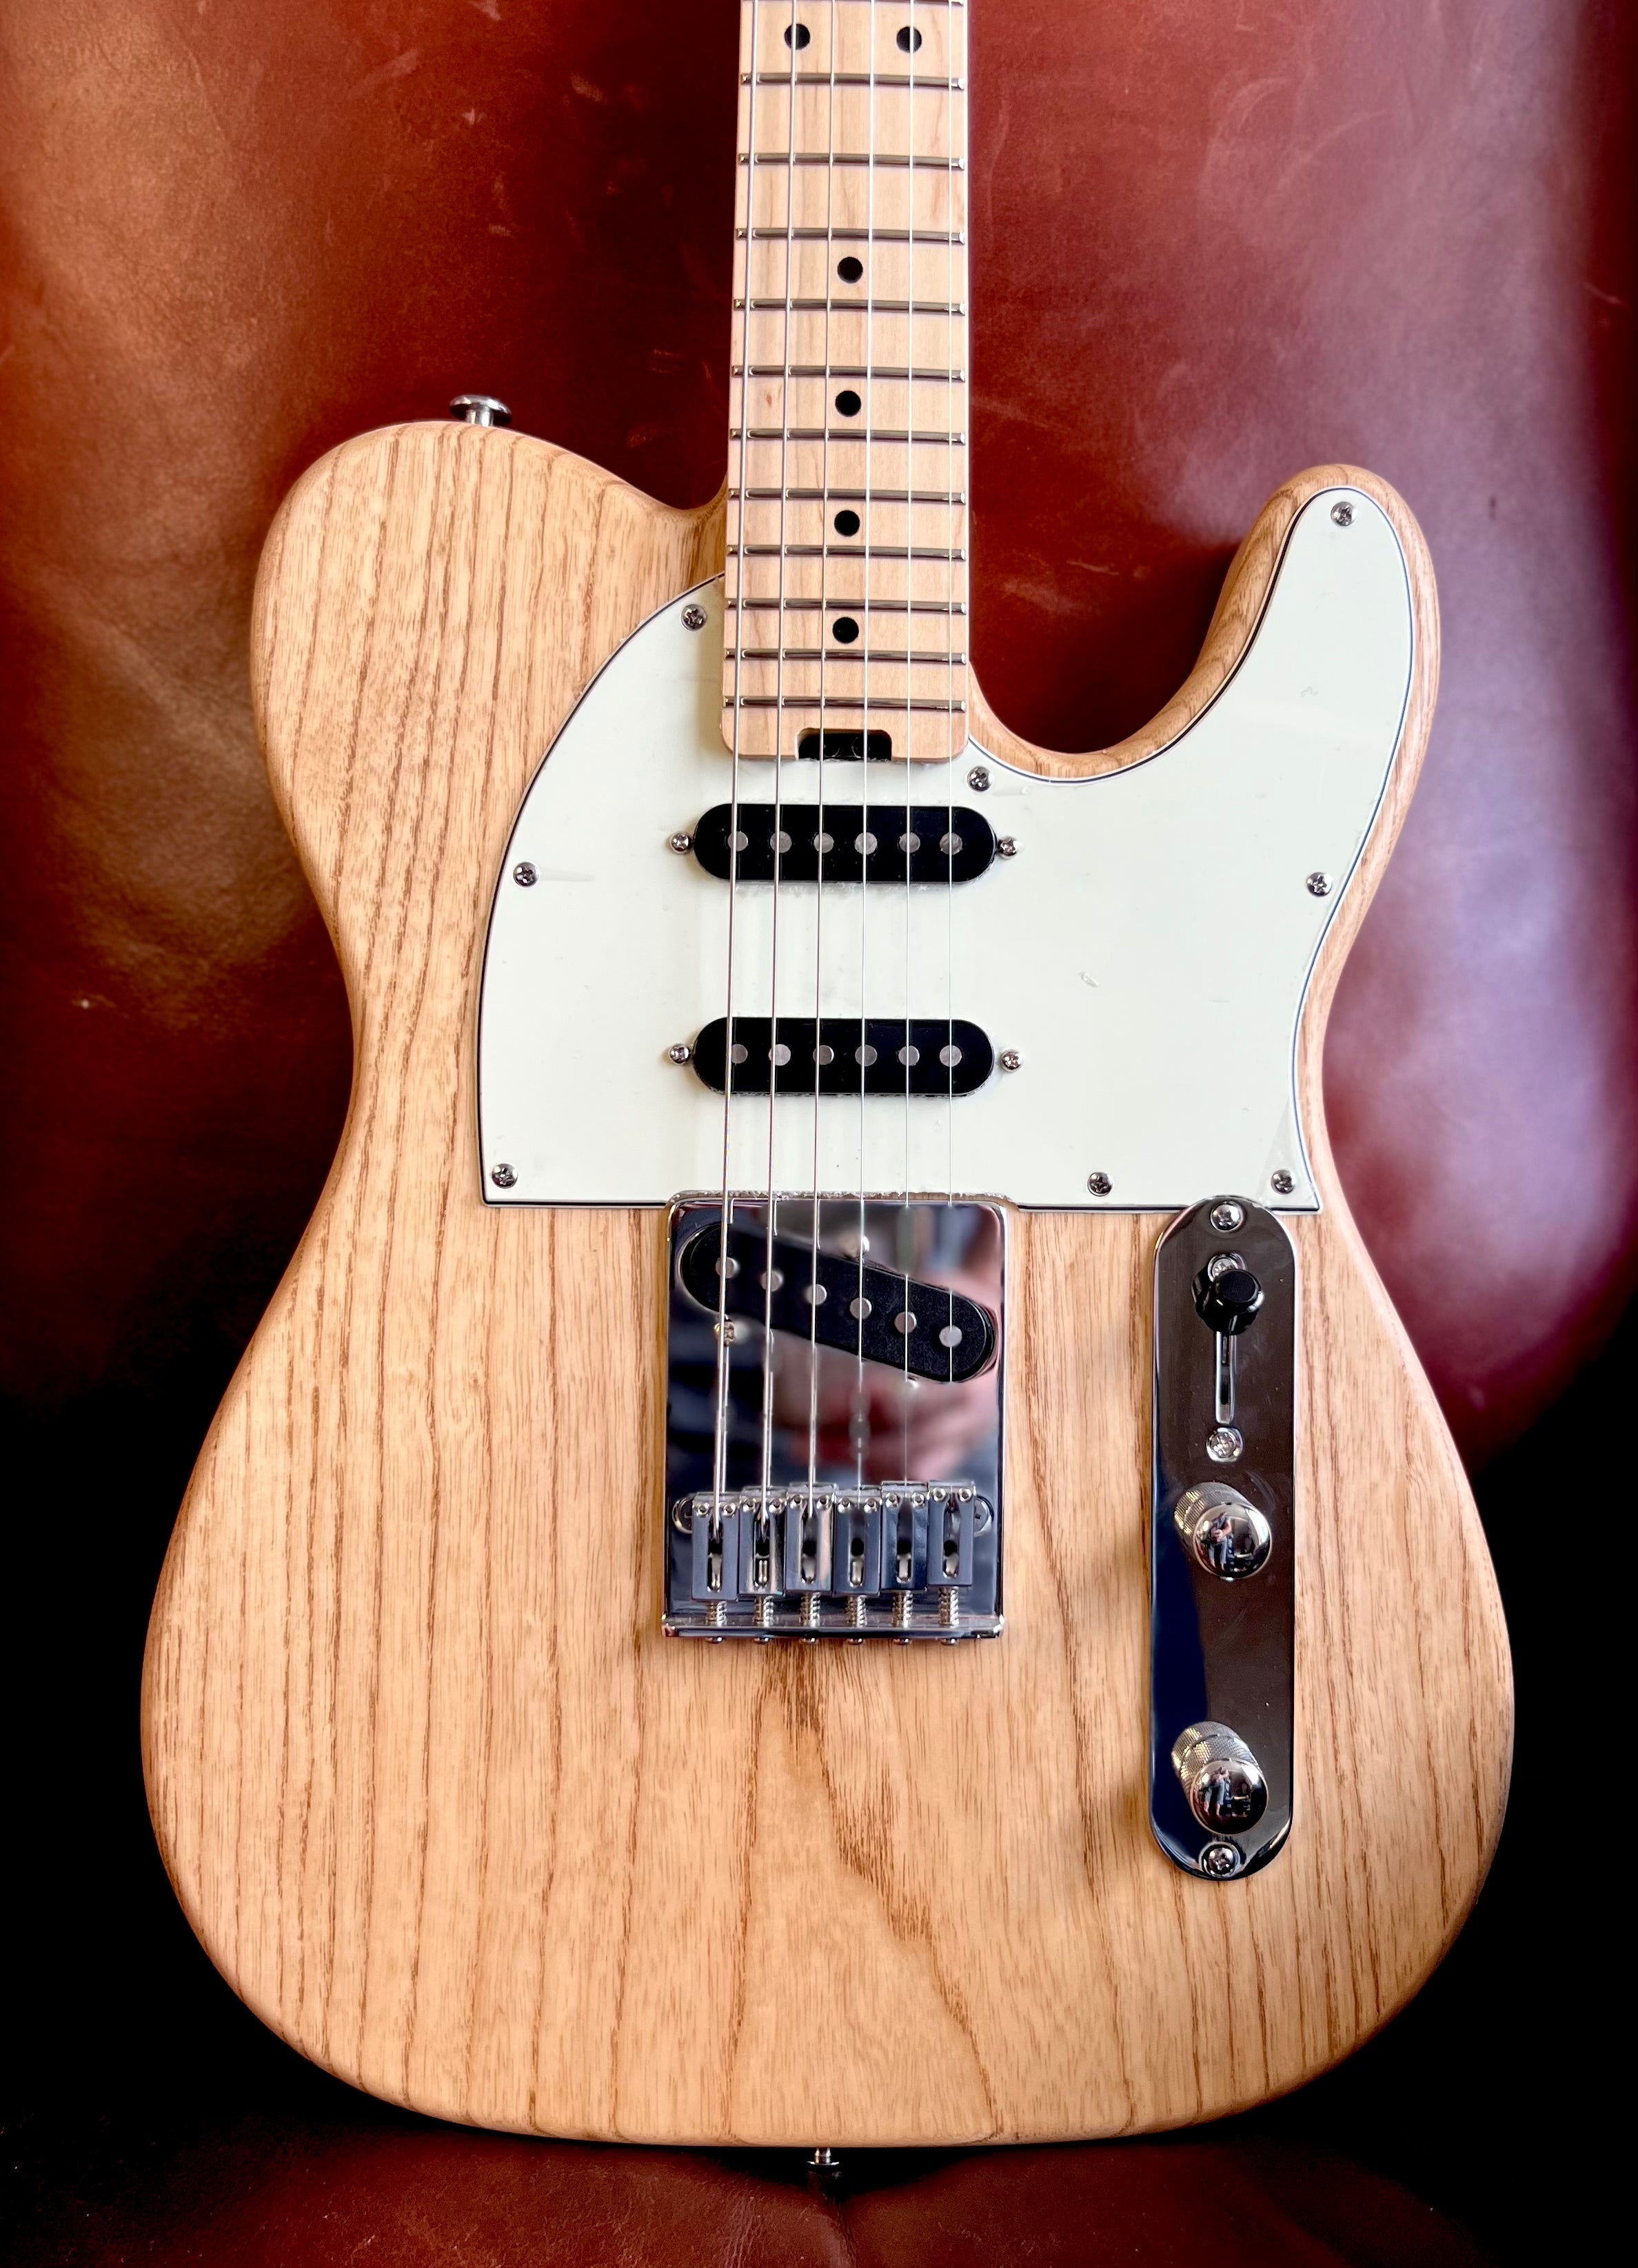 Gordon Smith Classic T SSS Swamp Ash Custom,  for sale at Richards Guitars.